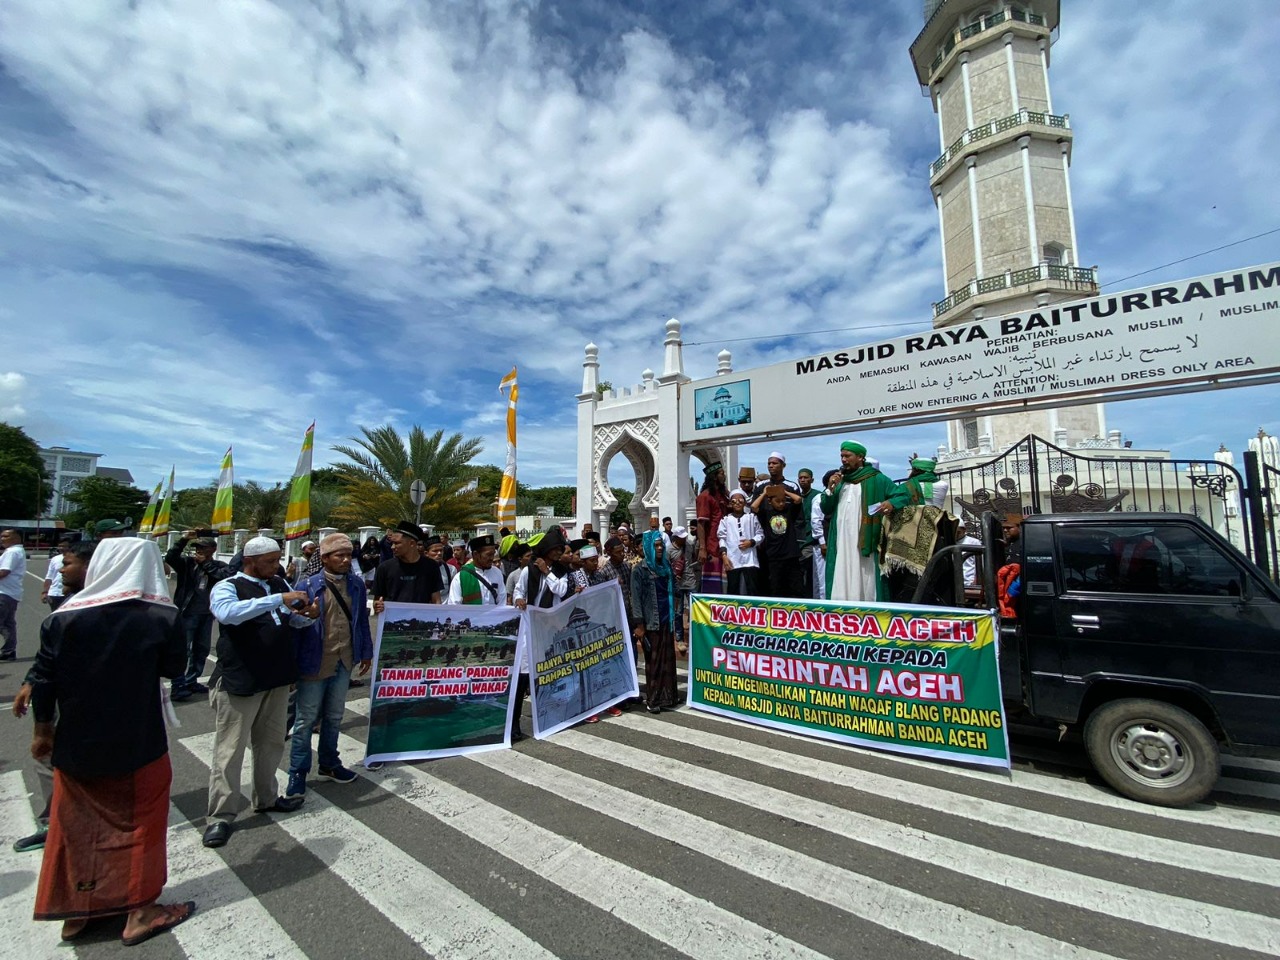 Gelar aksi di depan MRB, massa minta TNI jangan kuasai tanah wakaf Blang Padang